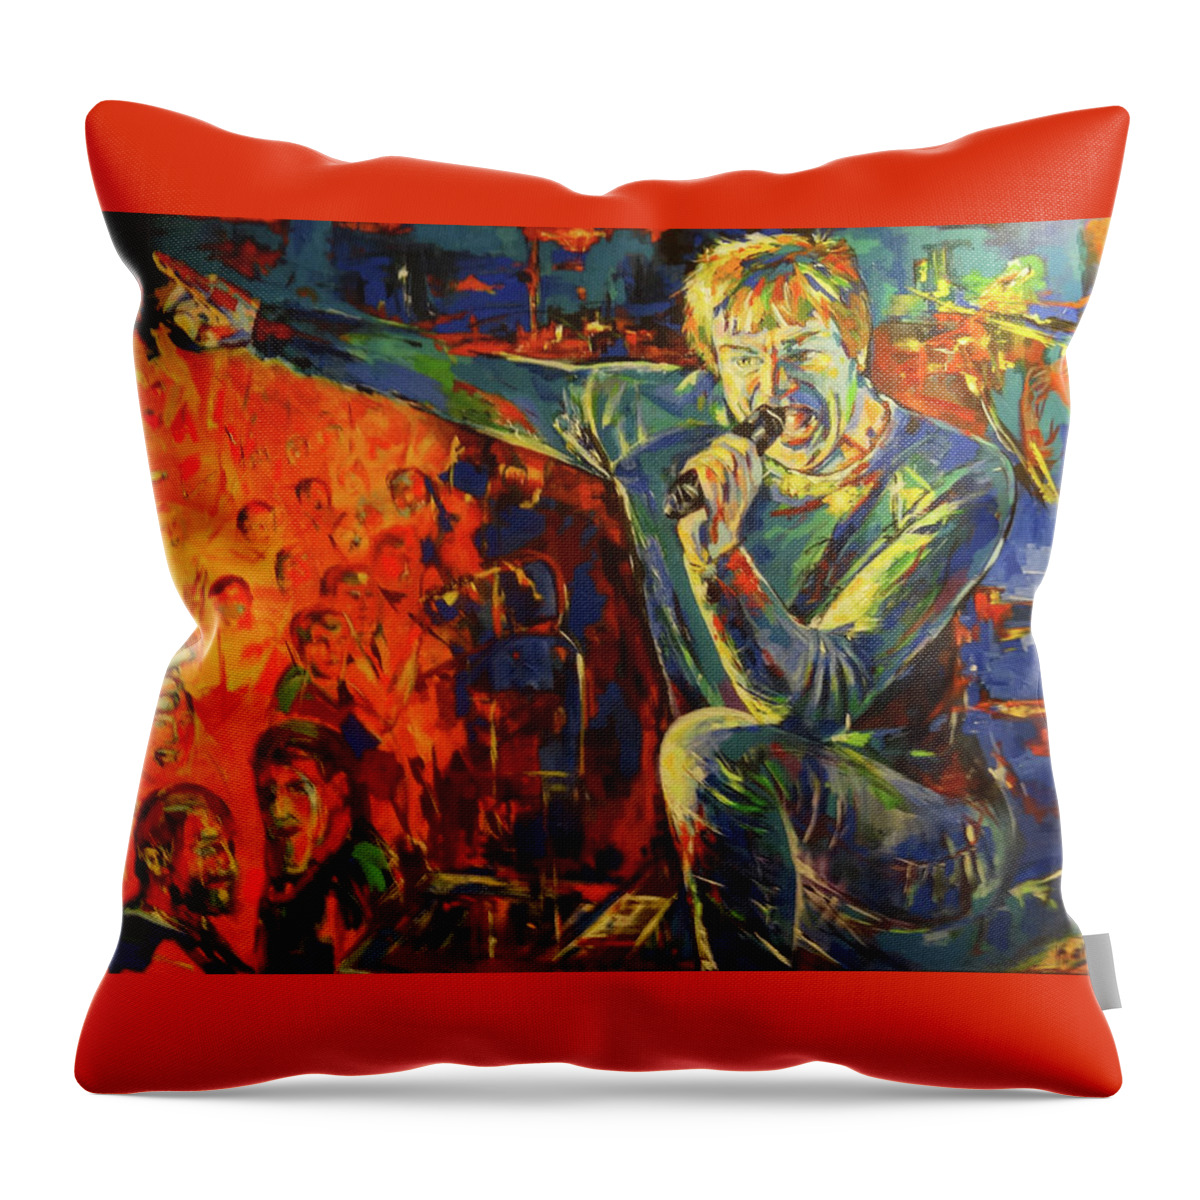 Duesseldorf Throw Pillow featuring the painting Campino by Koro Arandia